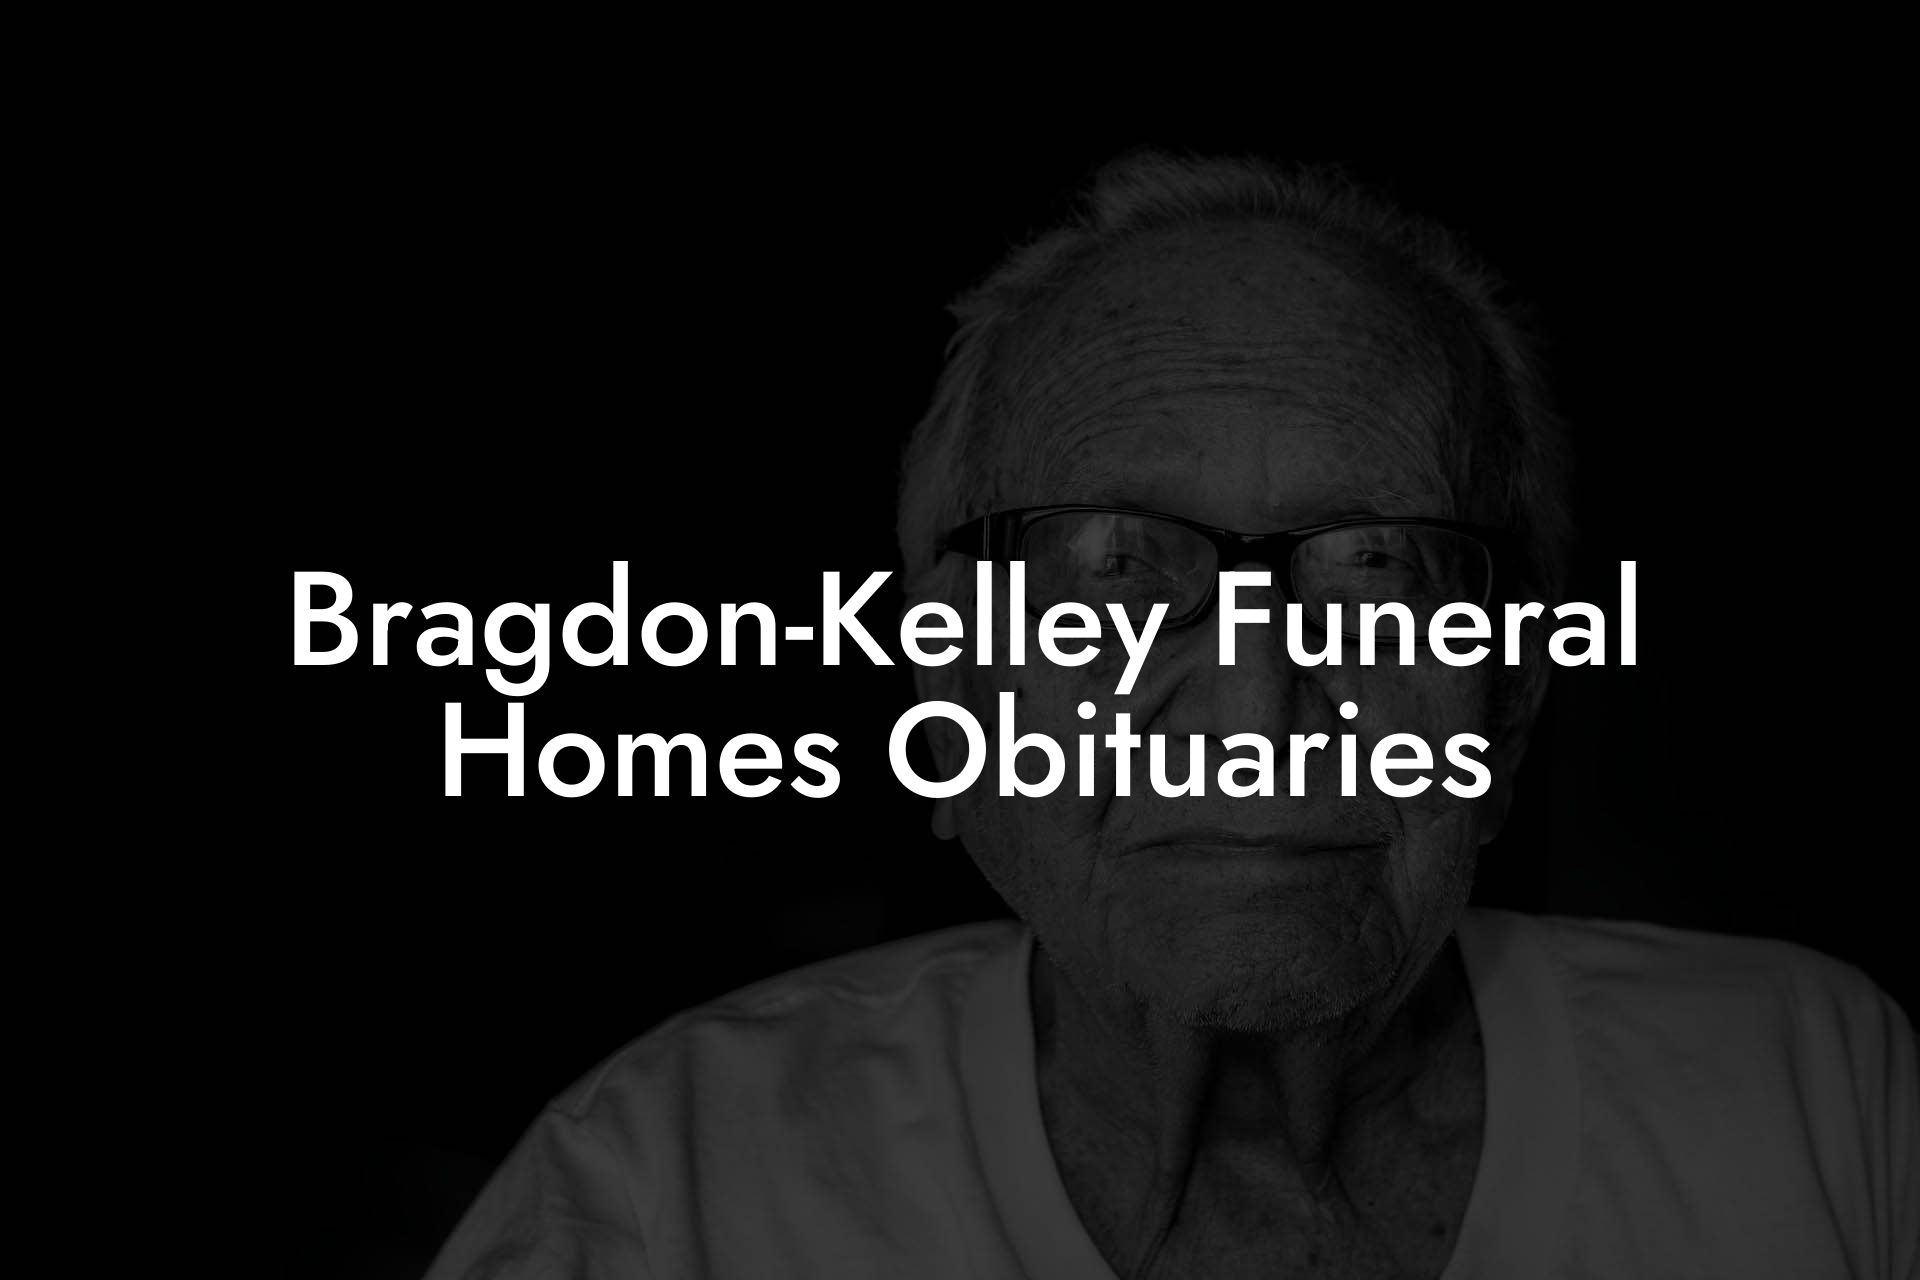 Bragdon-Kelley Funeral Homes Obituaries